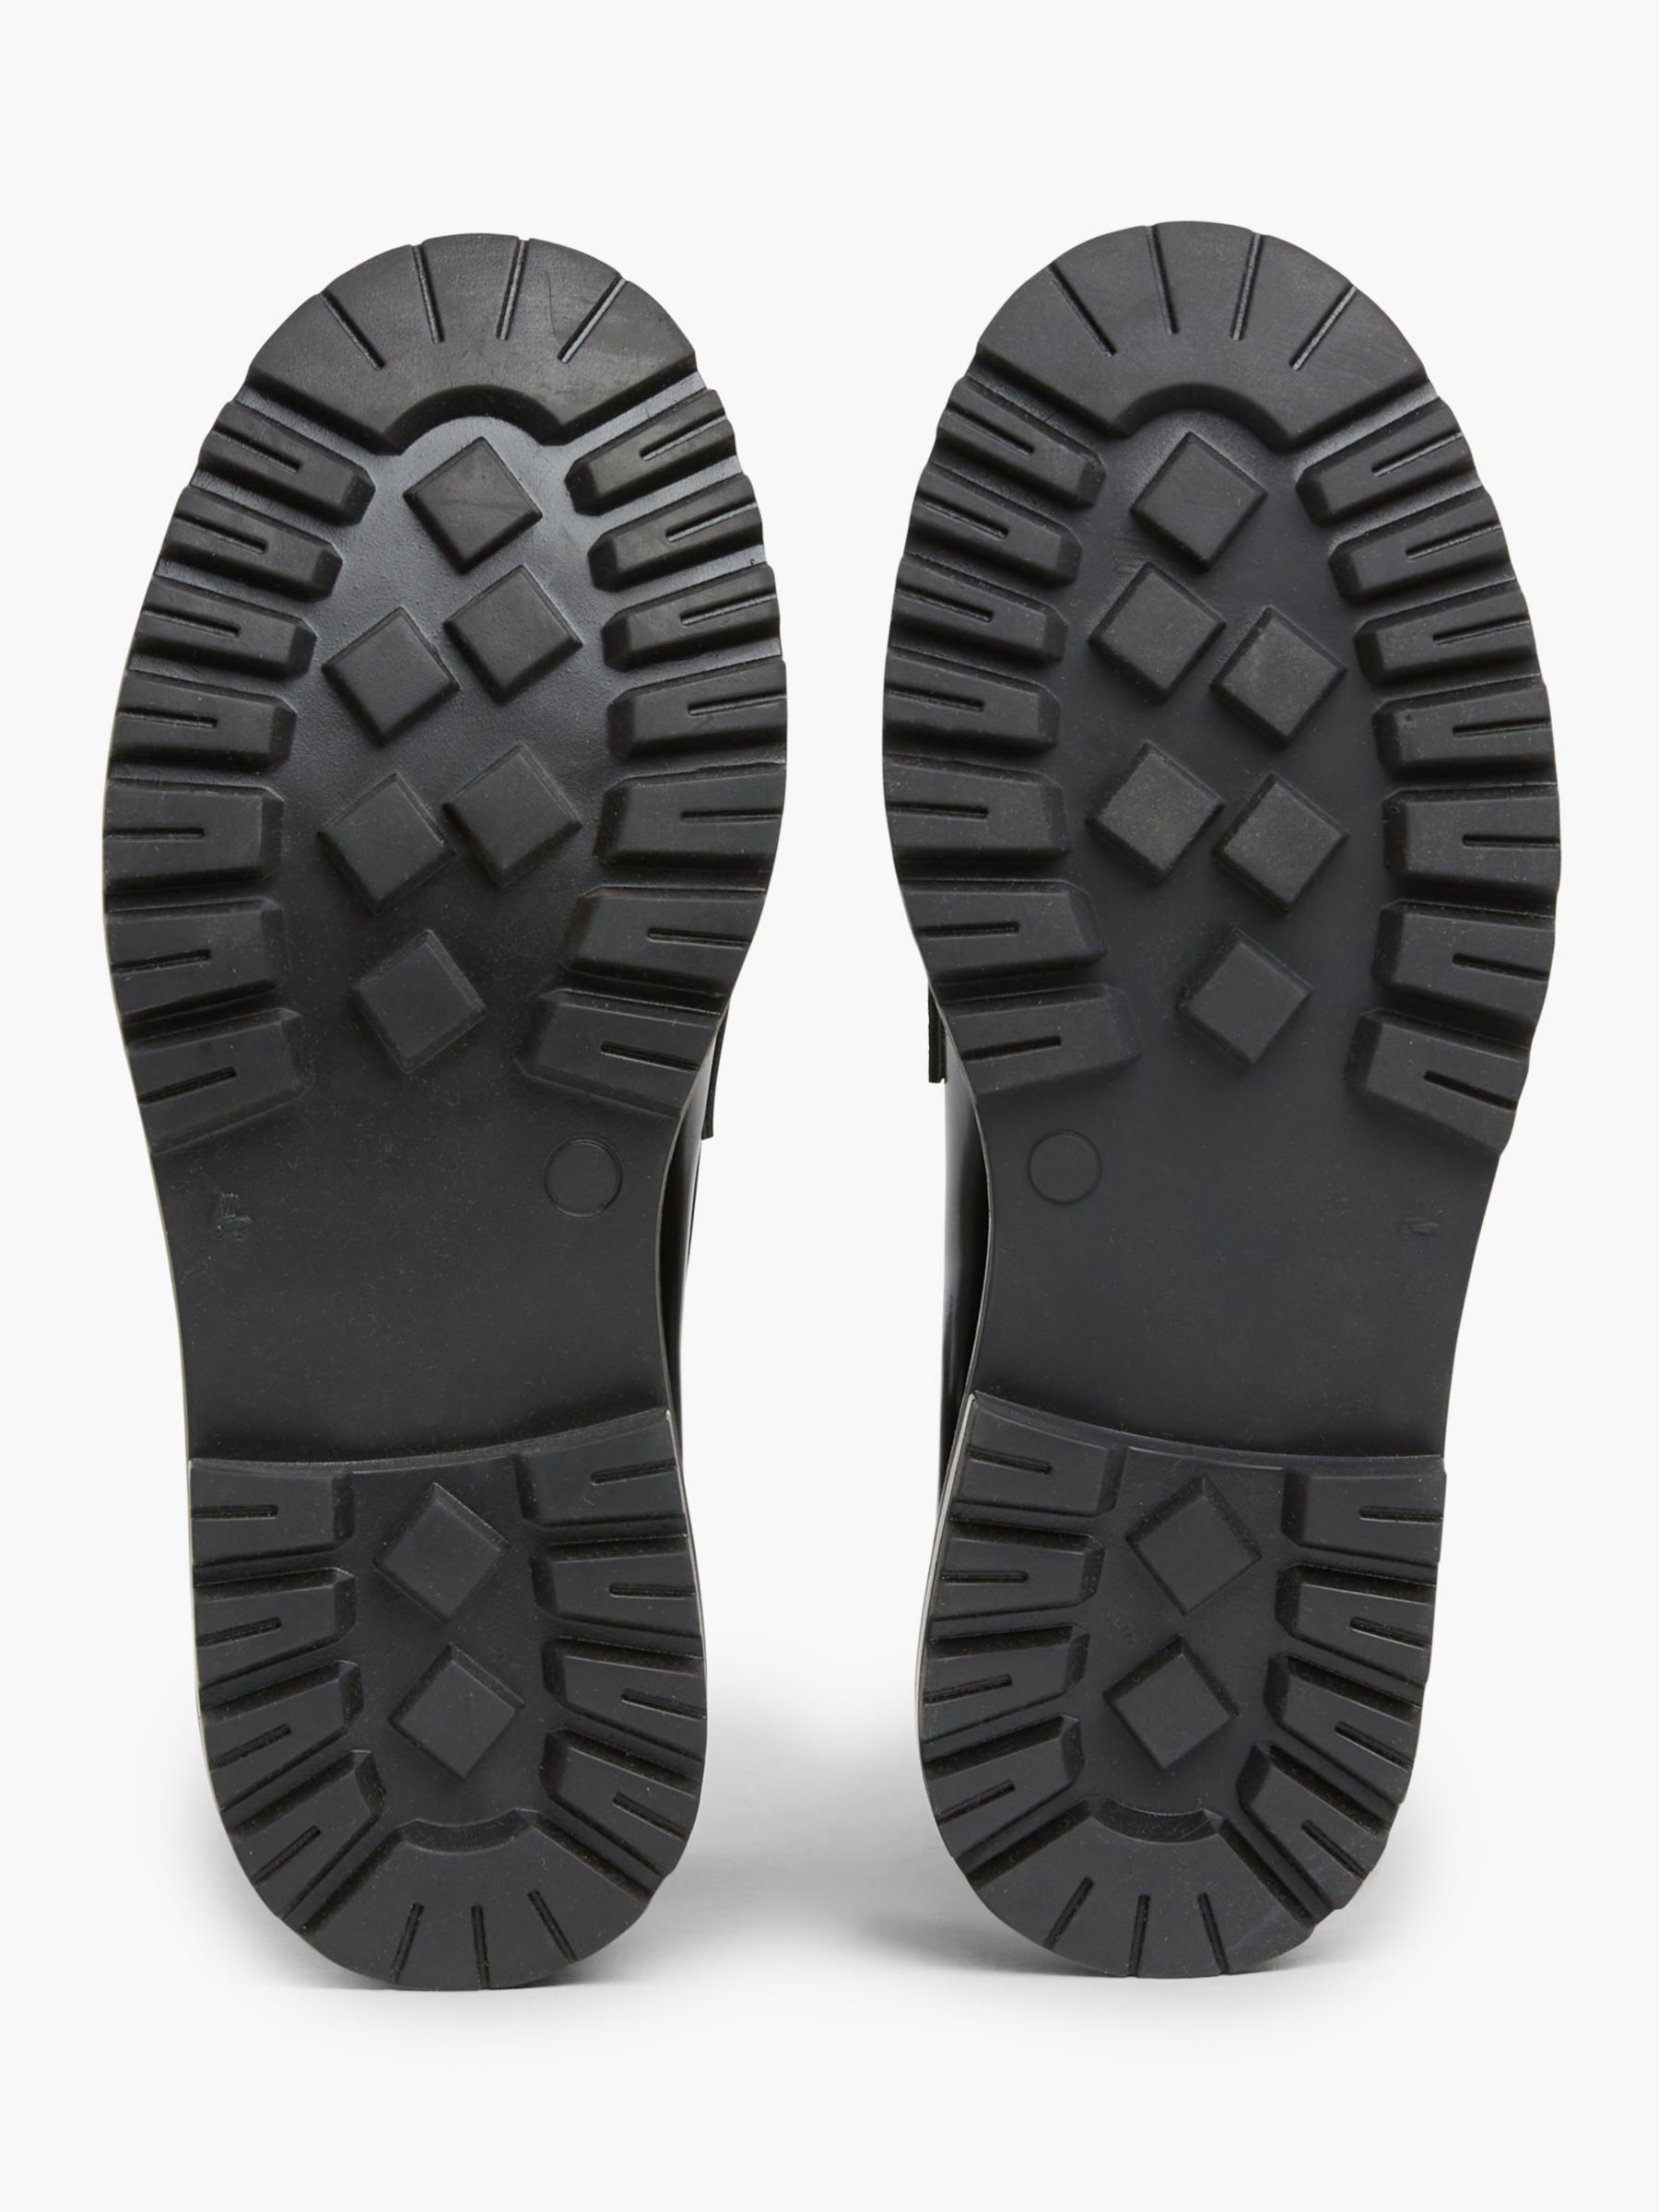 Buy Calvin Klein Kids' Chunky Loafer Shoes, Black Online at johnlewis.com